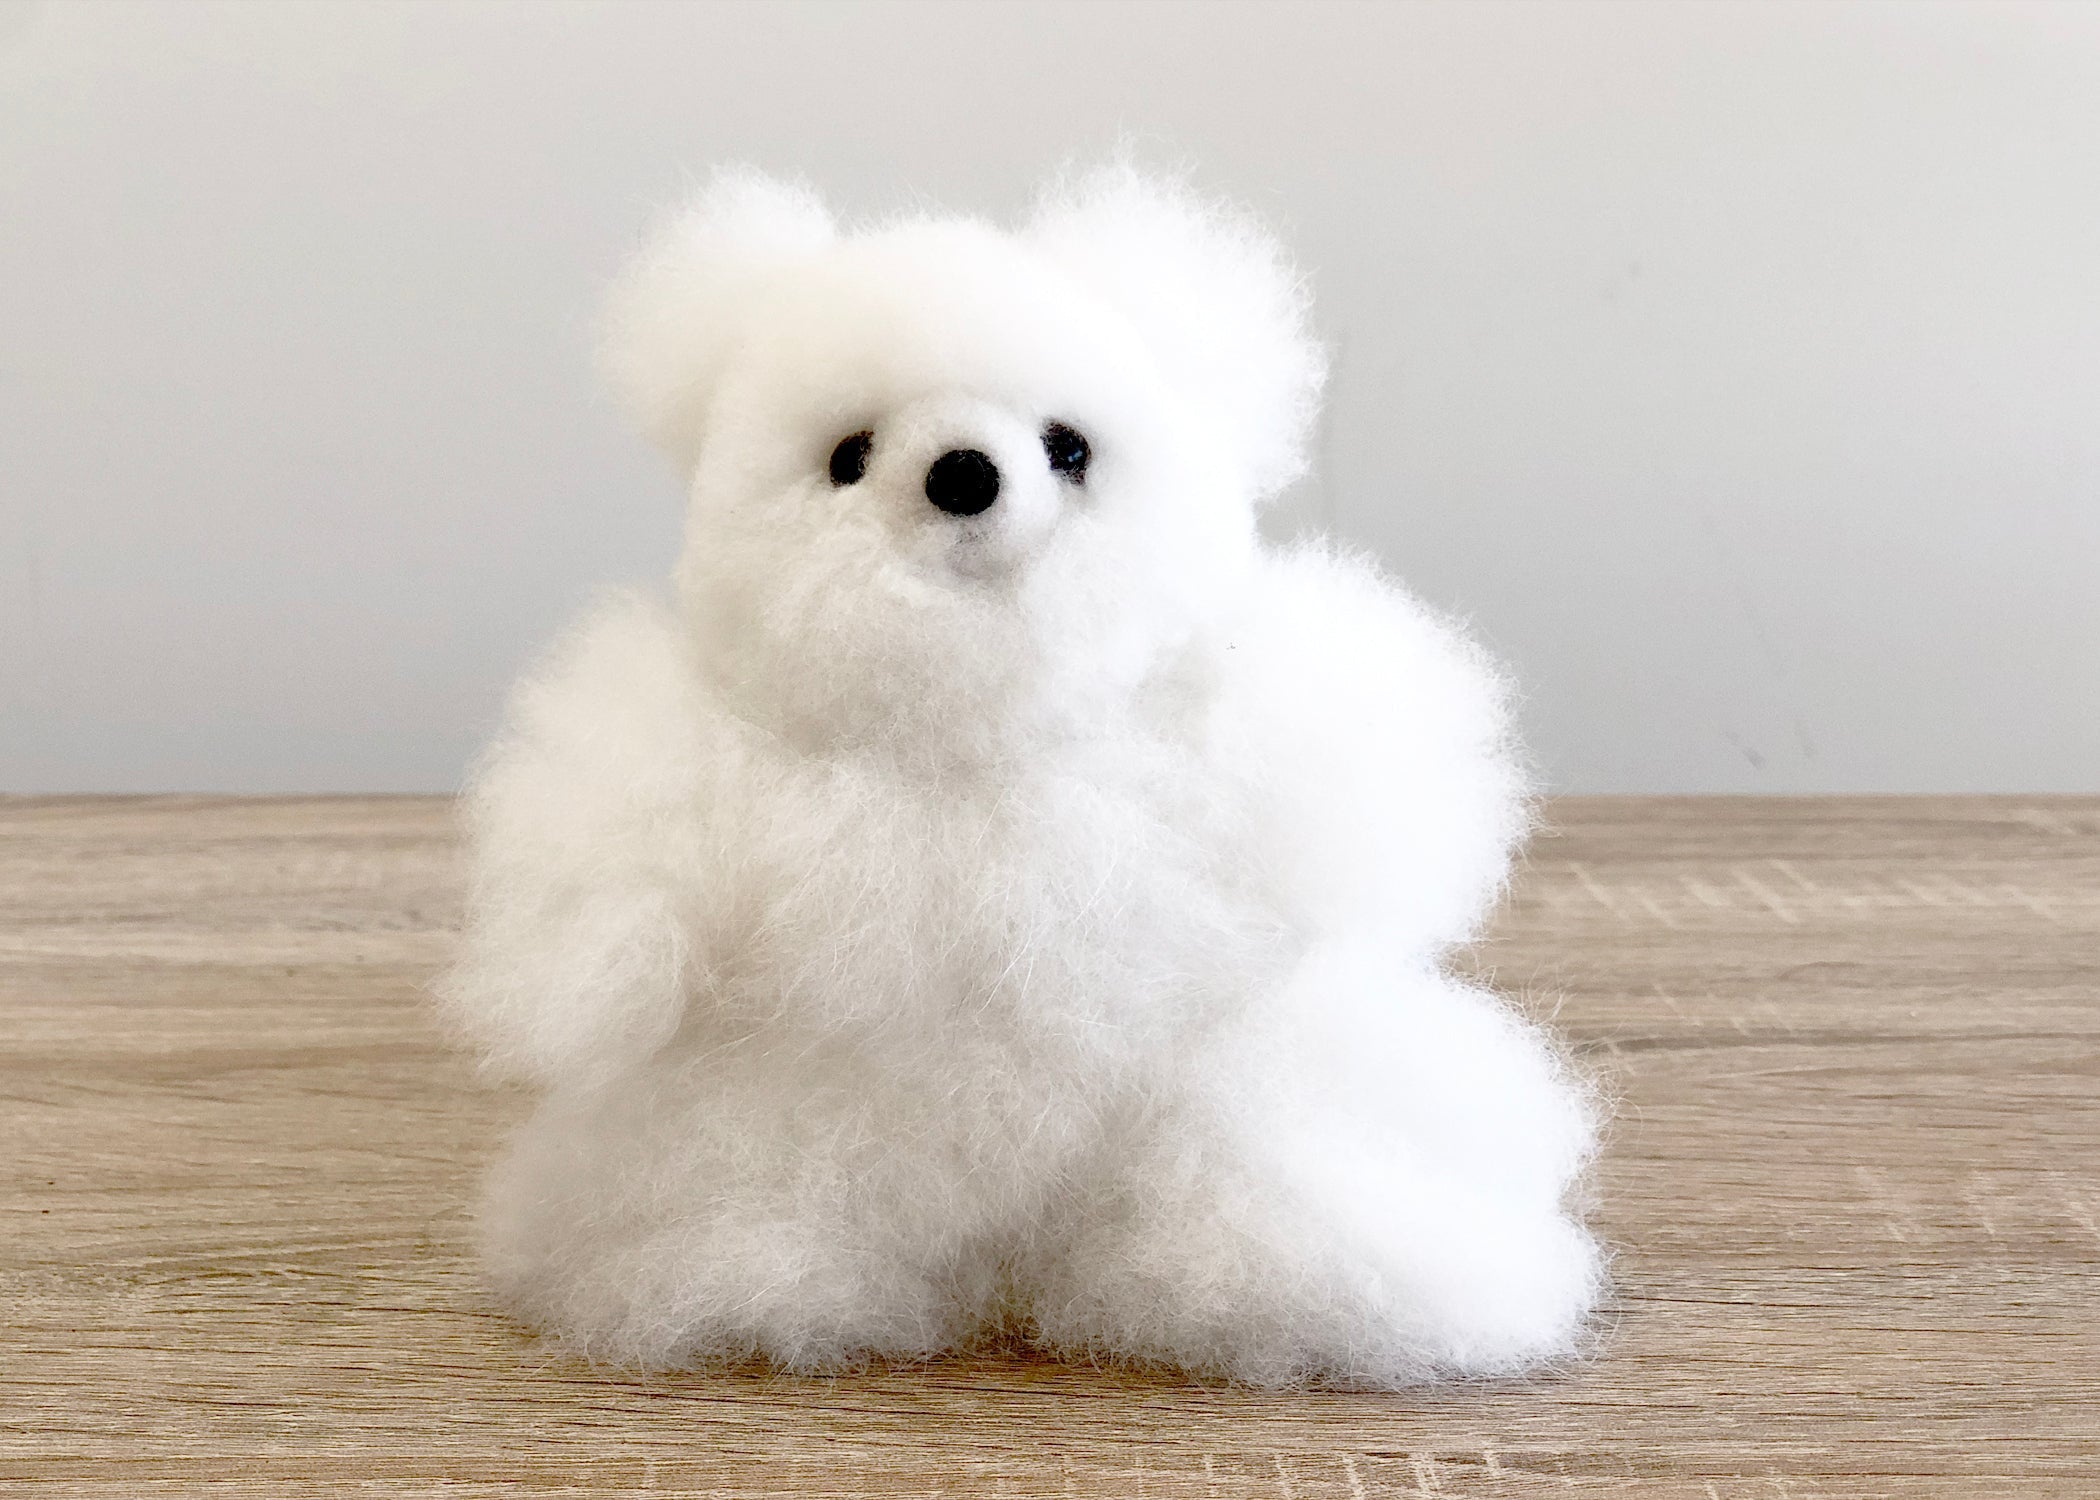 Alpaca Stuffed Animal - Bear - Micro 7"